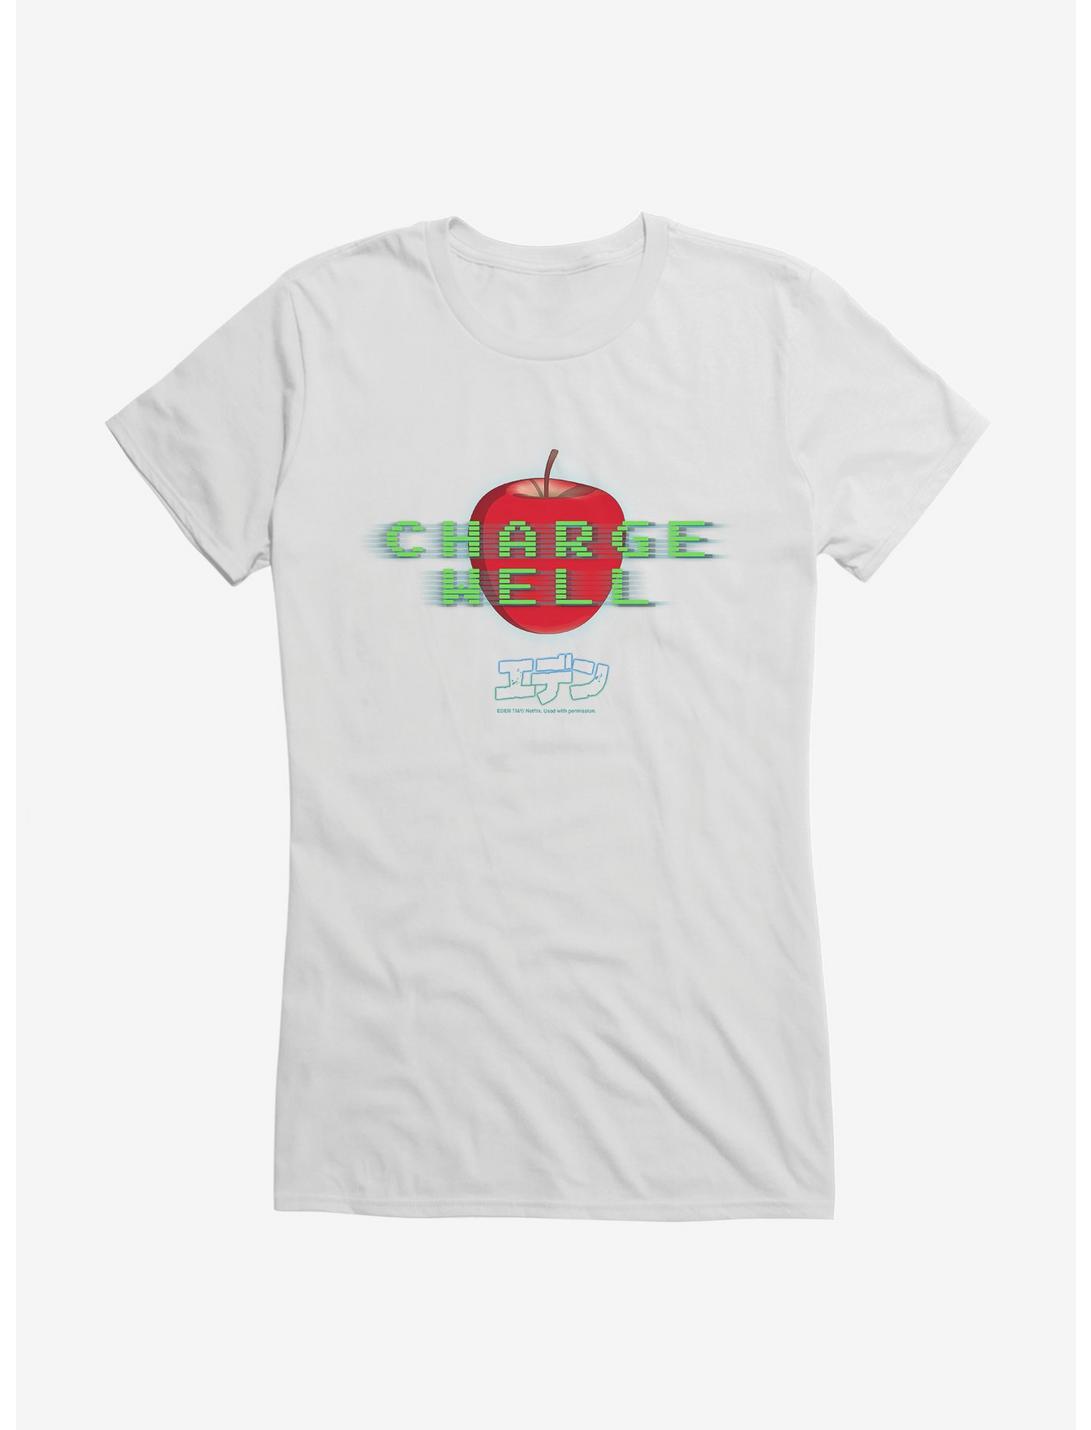 Eden Charge Well Apple Logo Girls T-Shirt, WHITE, hi-res